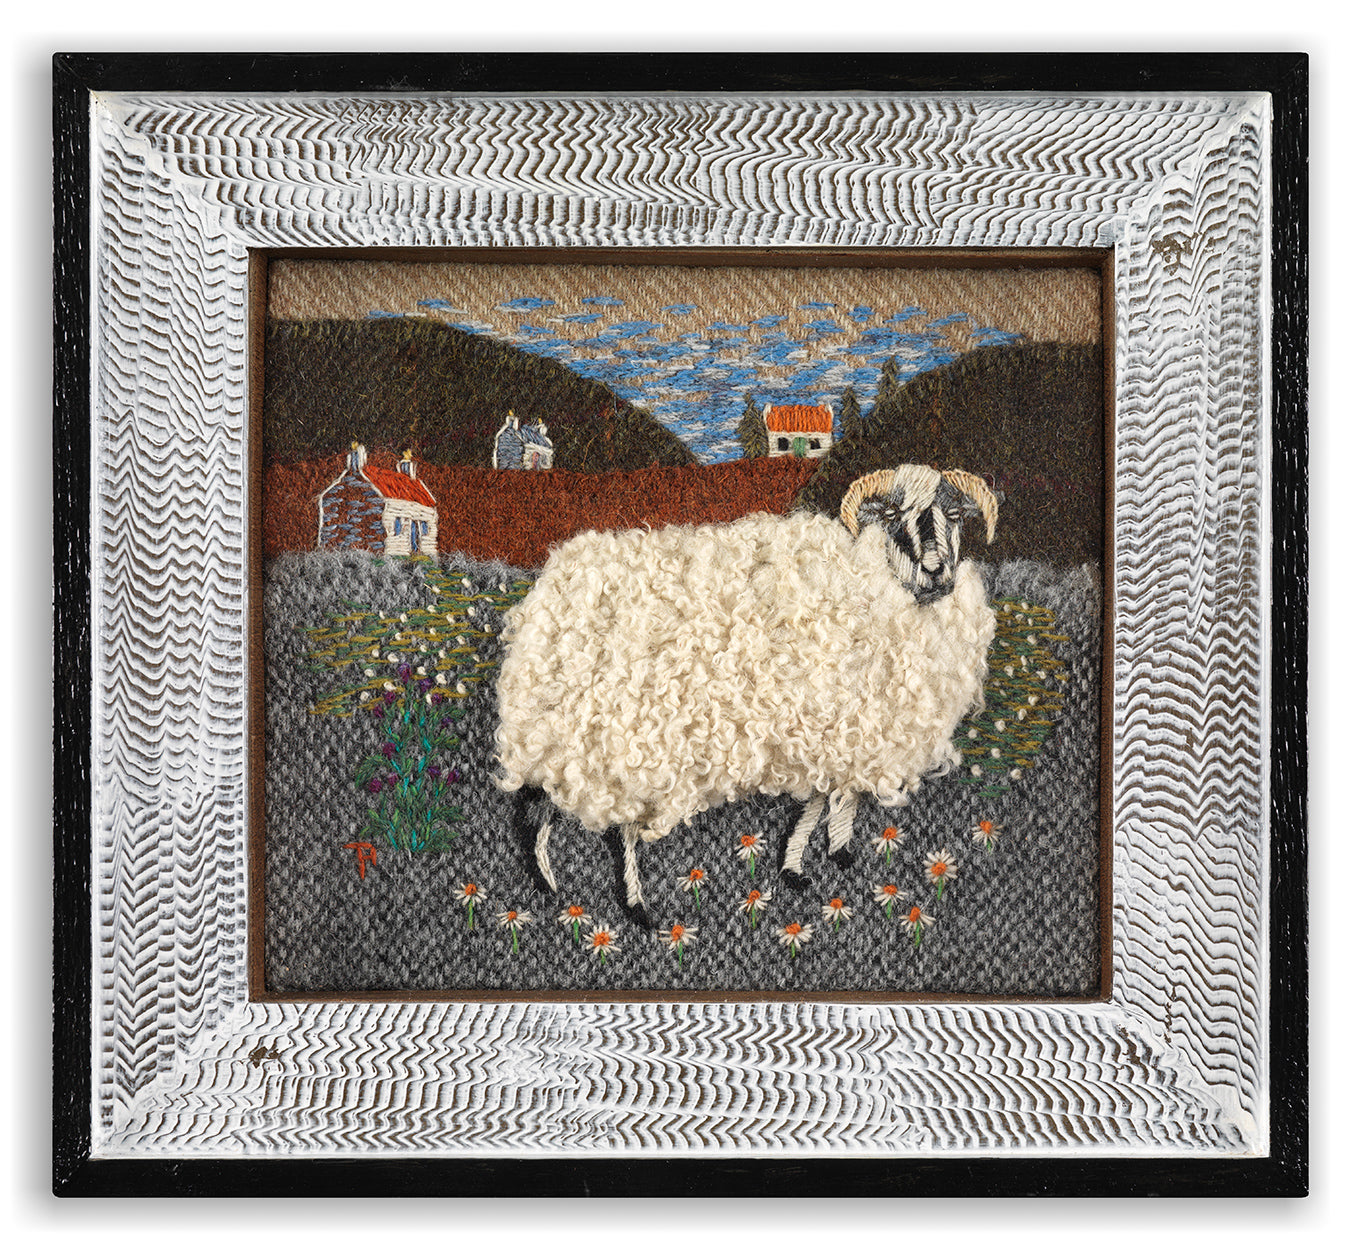 Ewe and Shielings in Raw Wool